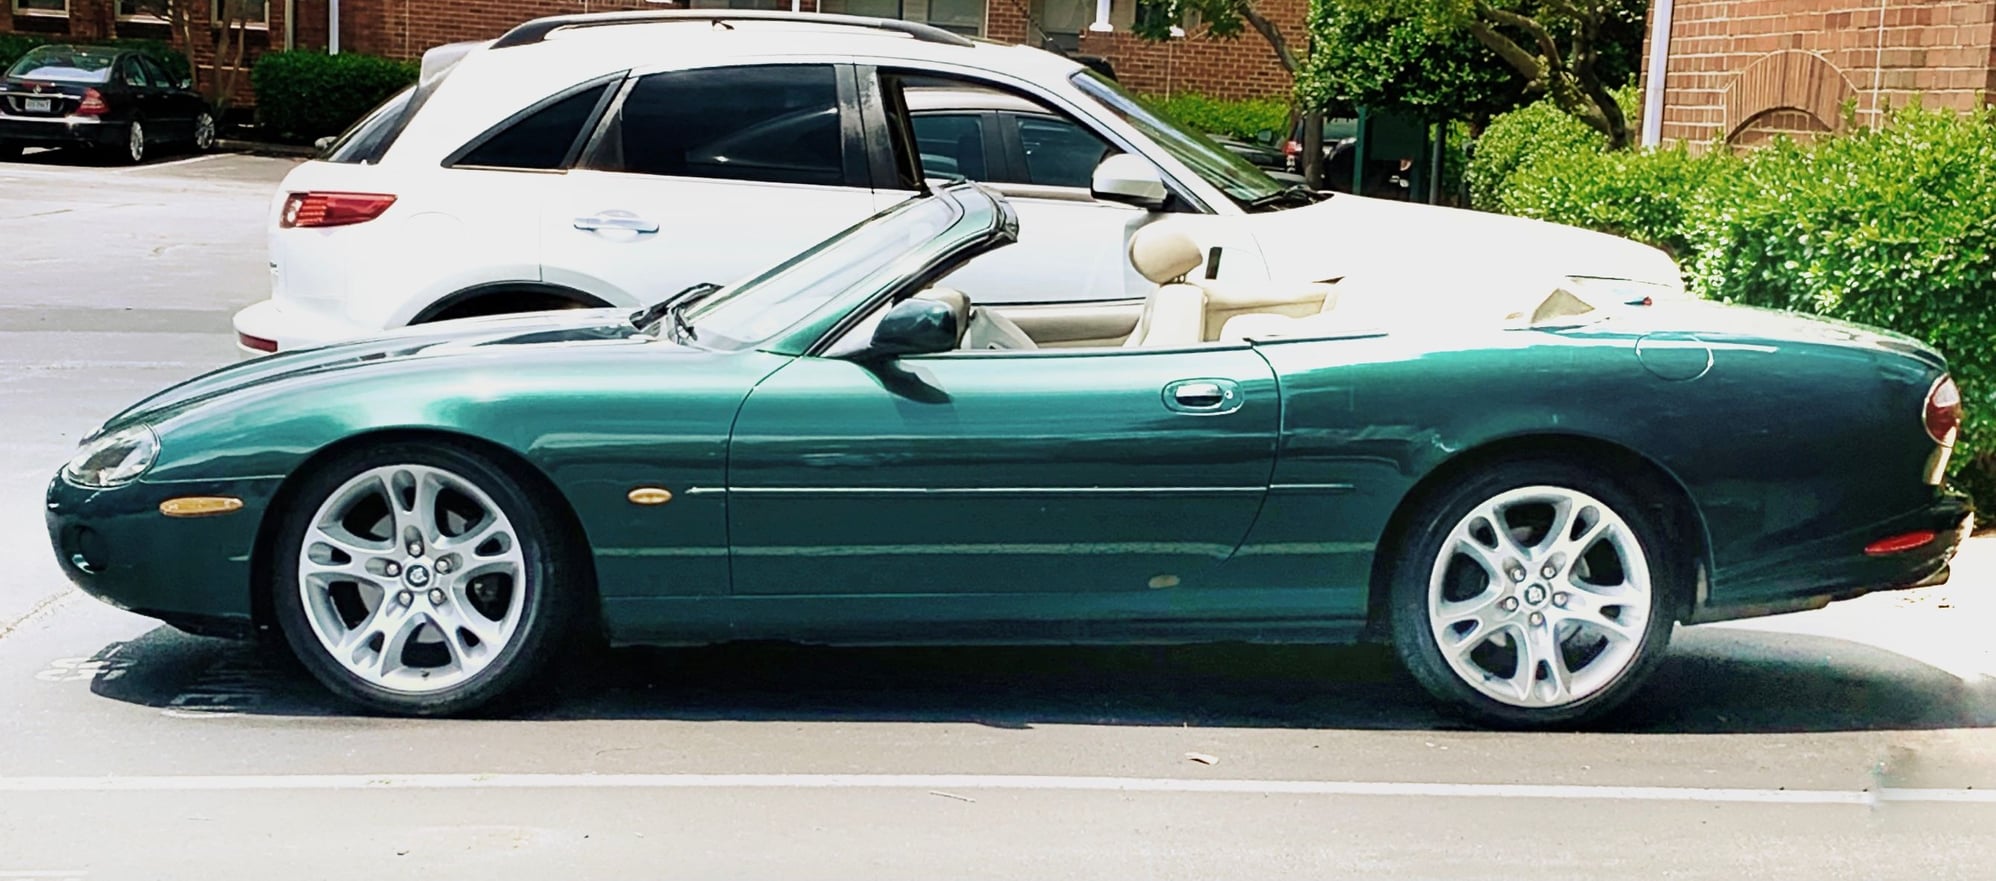 2003 Jaguar XK8 - 2003 Jaguar XK8 ~ Convertible - Used - VIN SAJDA42C332A32xxx - 135,000 Miles - 8 cyl - 2WD - Automatic - Convertible - Other - Norfolk, VA 23507, United States